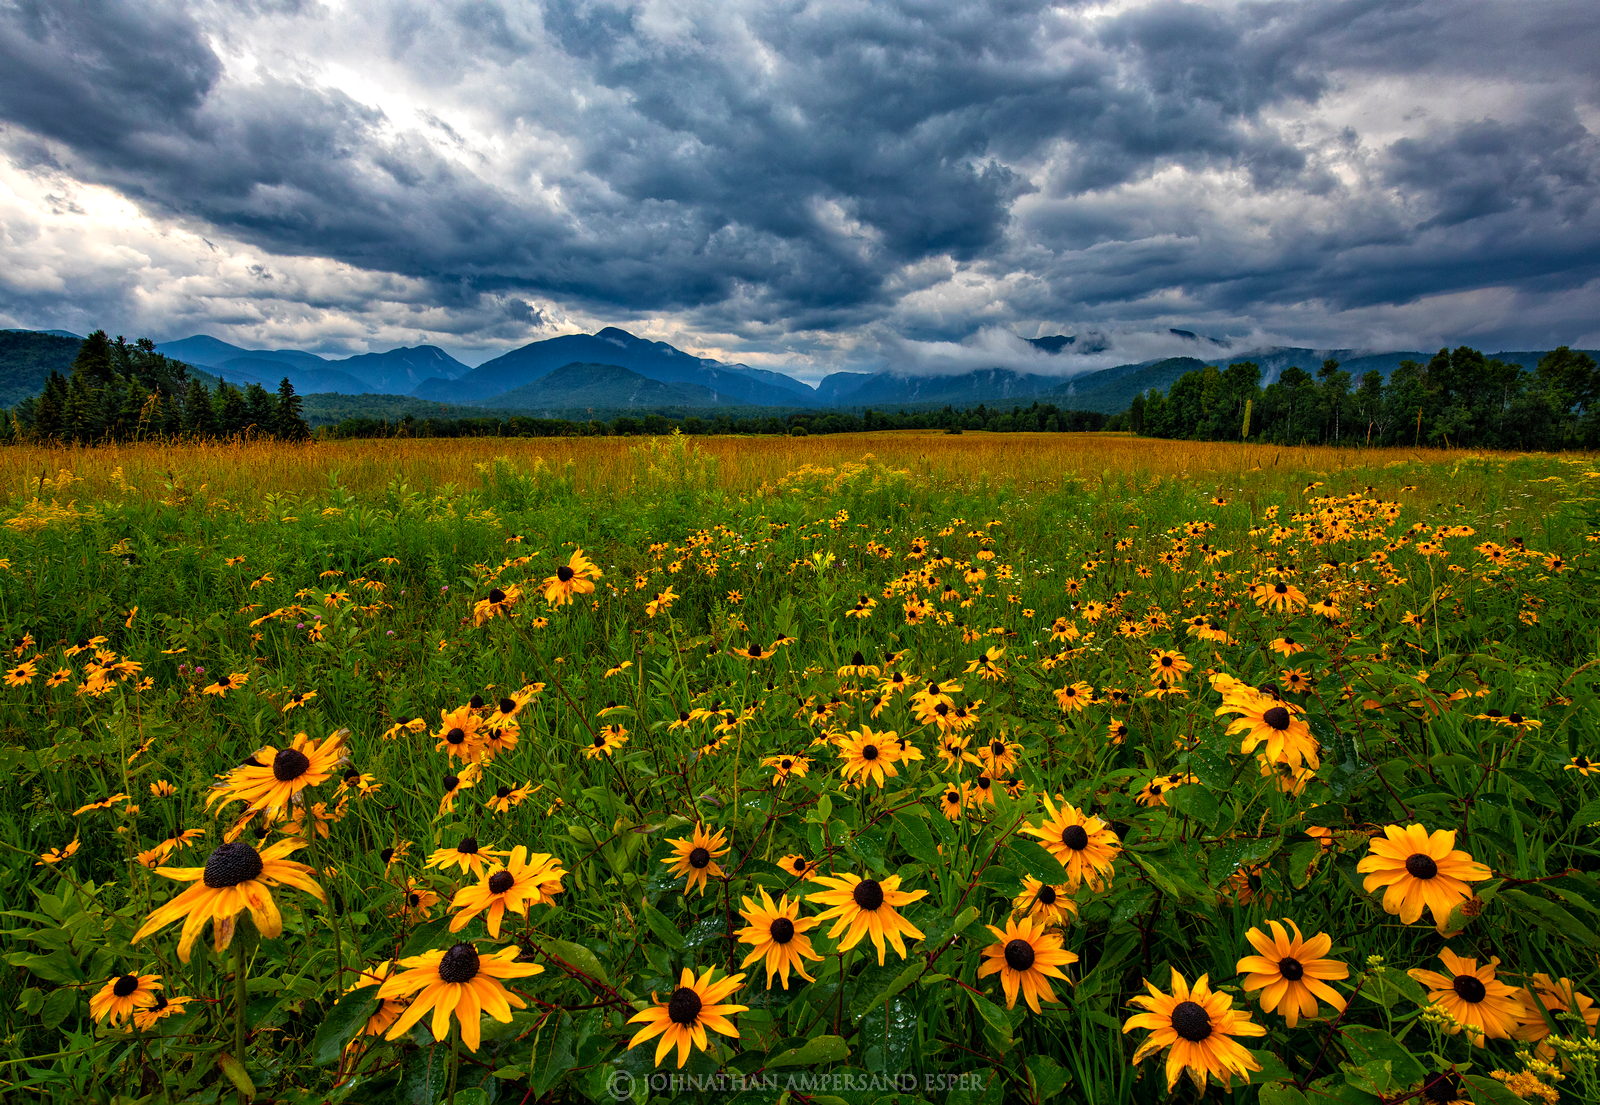 Adirondack Loj Road,Adirondack Loj Rd, wildflowers,wildflower fields, fields, summer,black eyed susans,2017,stormclouds,High...